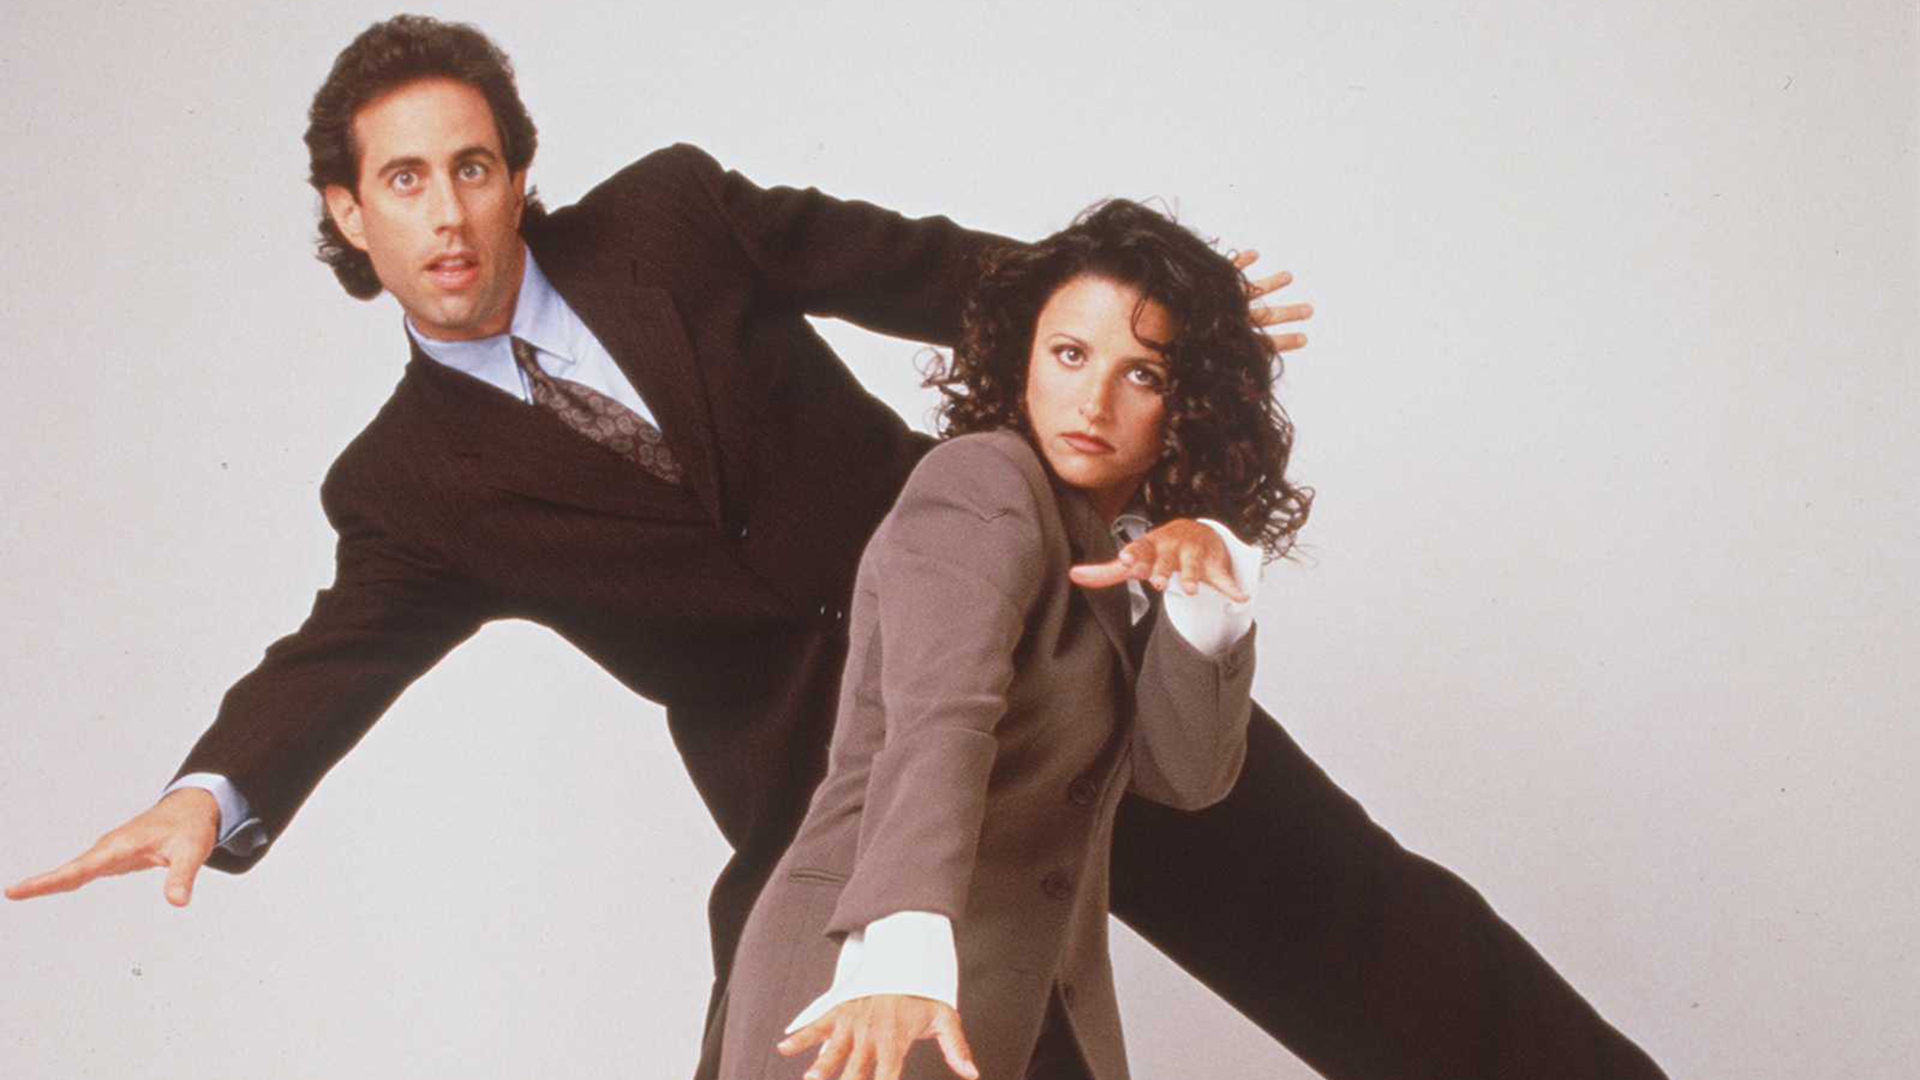 Celebrating Elaine's awkward 'Seinfeld' dance